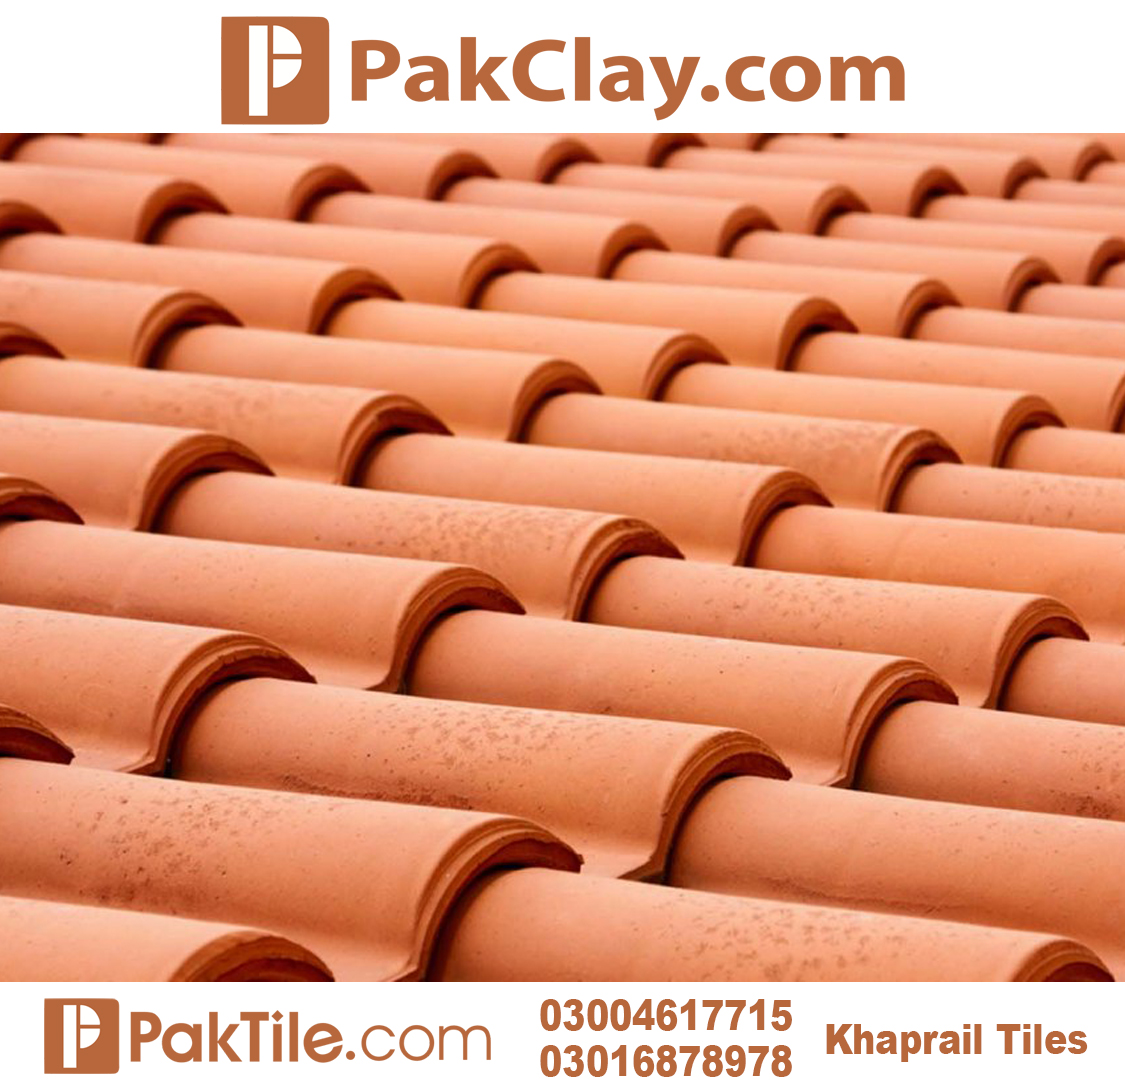 1 Pak Clay Khaprail Tiles in Multan